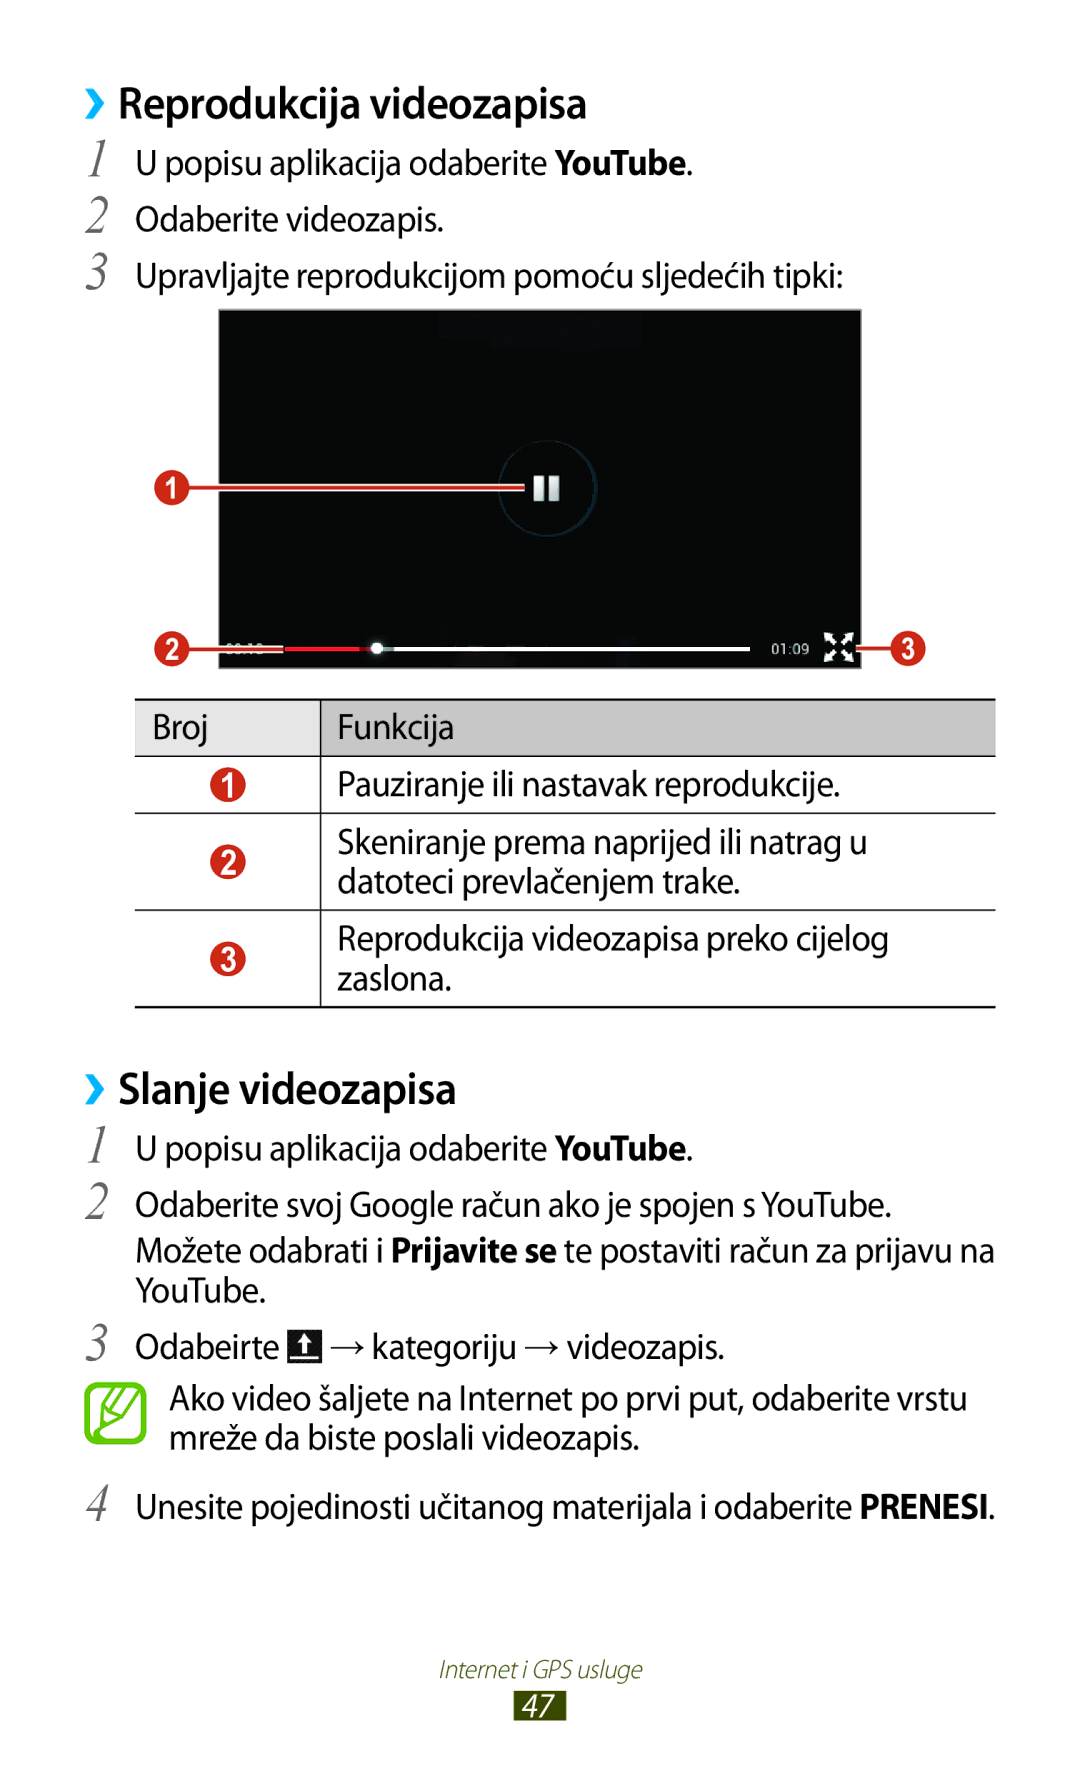 Samsung GT-P3110ZWATRA ››Reprodukcija videozapisa, ››Slanje videozapisa, Reprodukcija videozapisa preko cijelog zaslona 